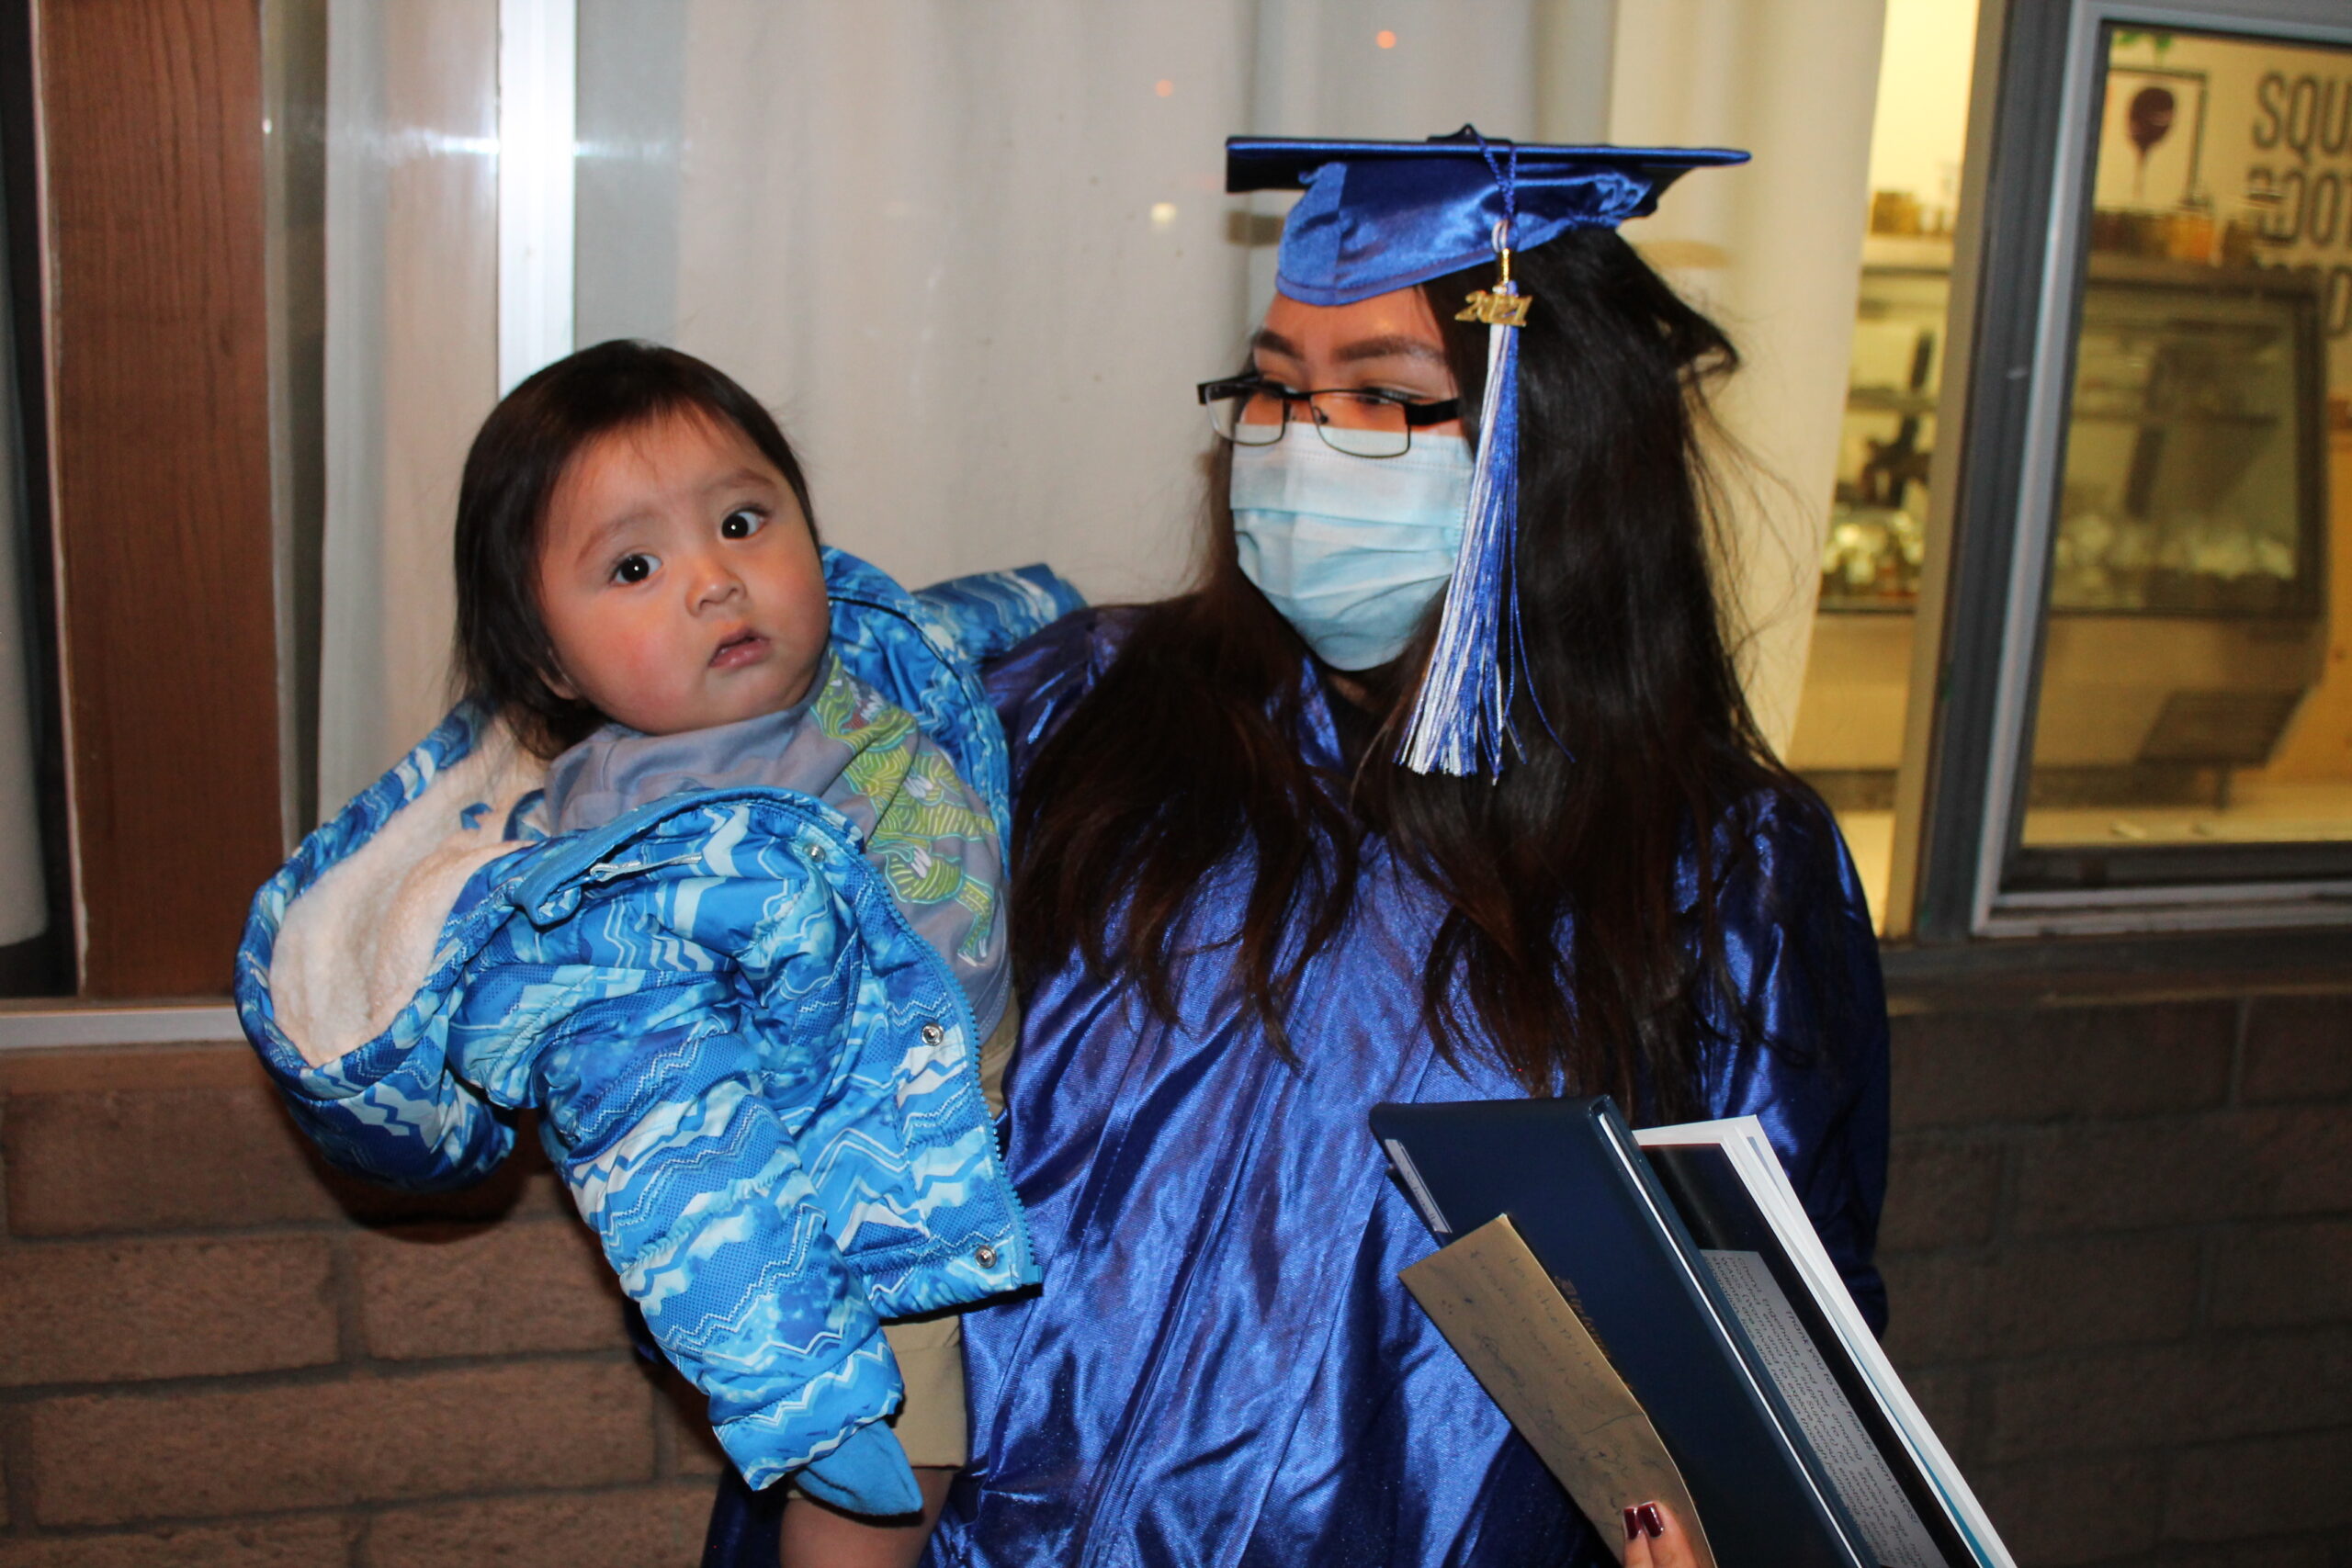 Student Holding Child at Graduation